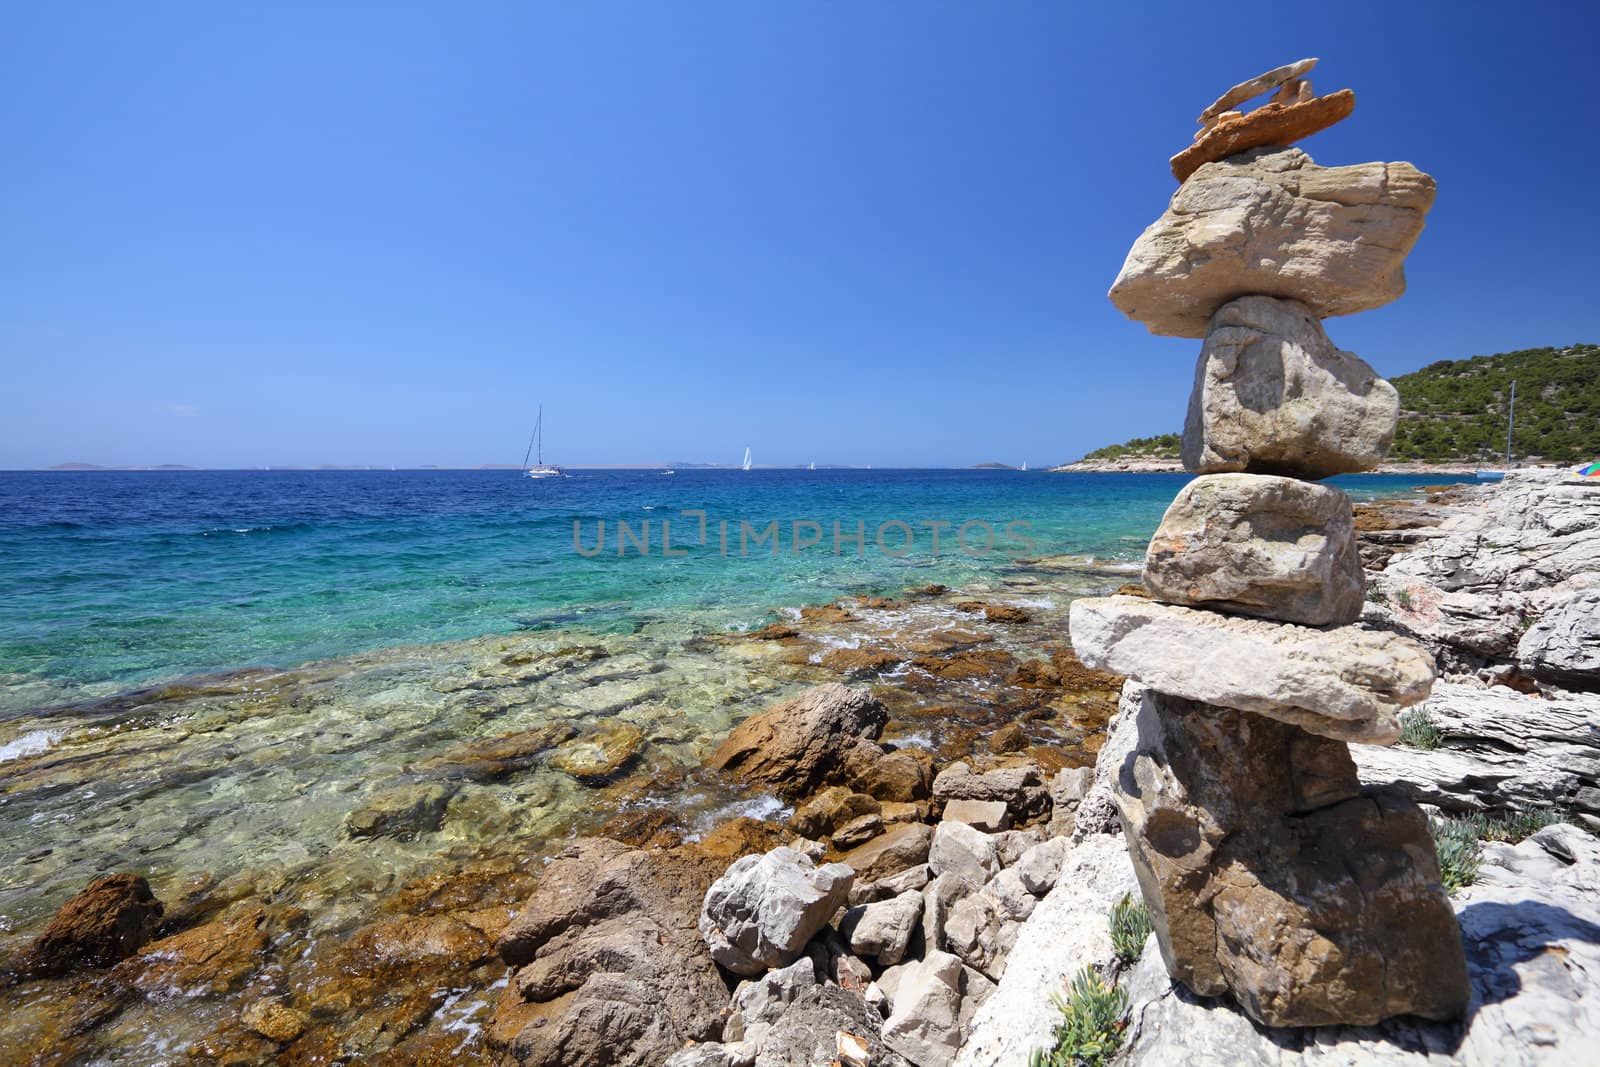 Murter island beach - Adriatic Sea. Croatia - beautiful Mediterranean coast landscape in Dalmatia.